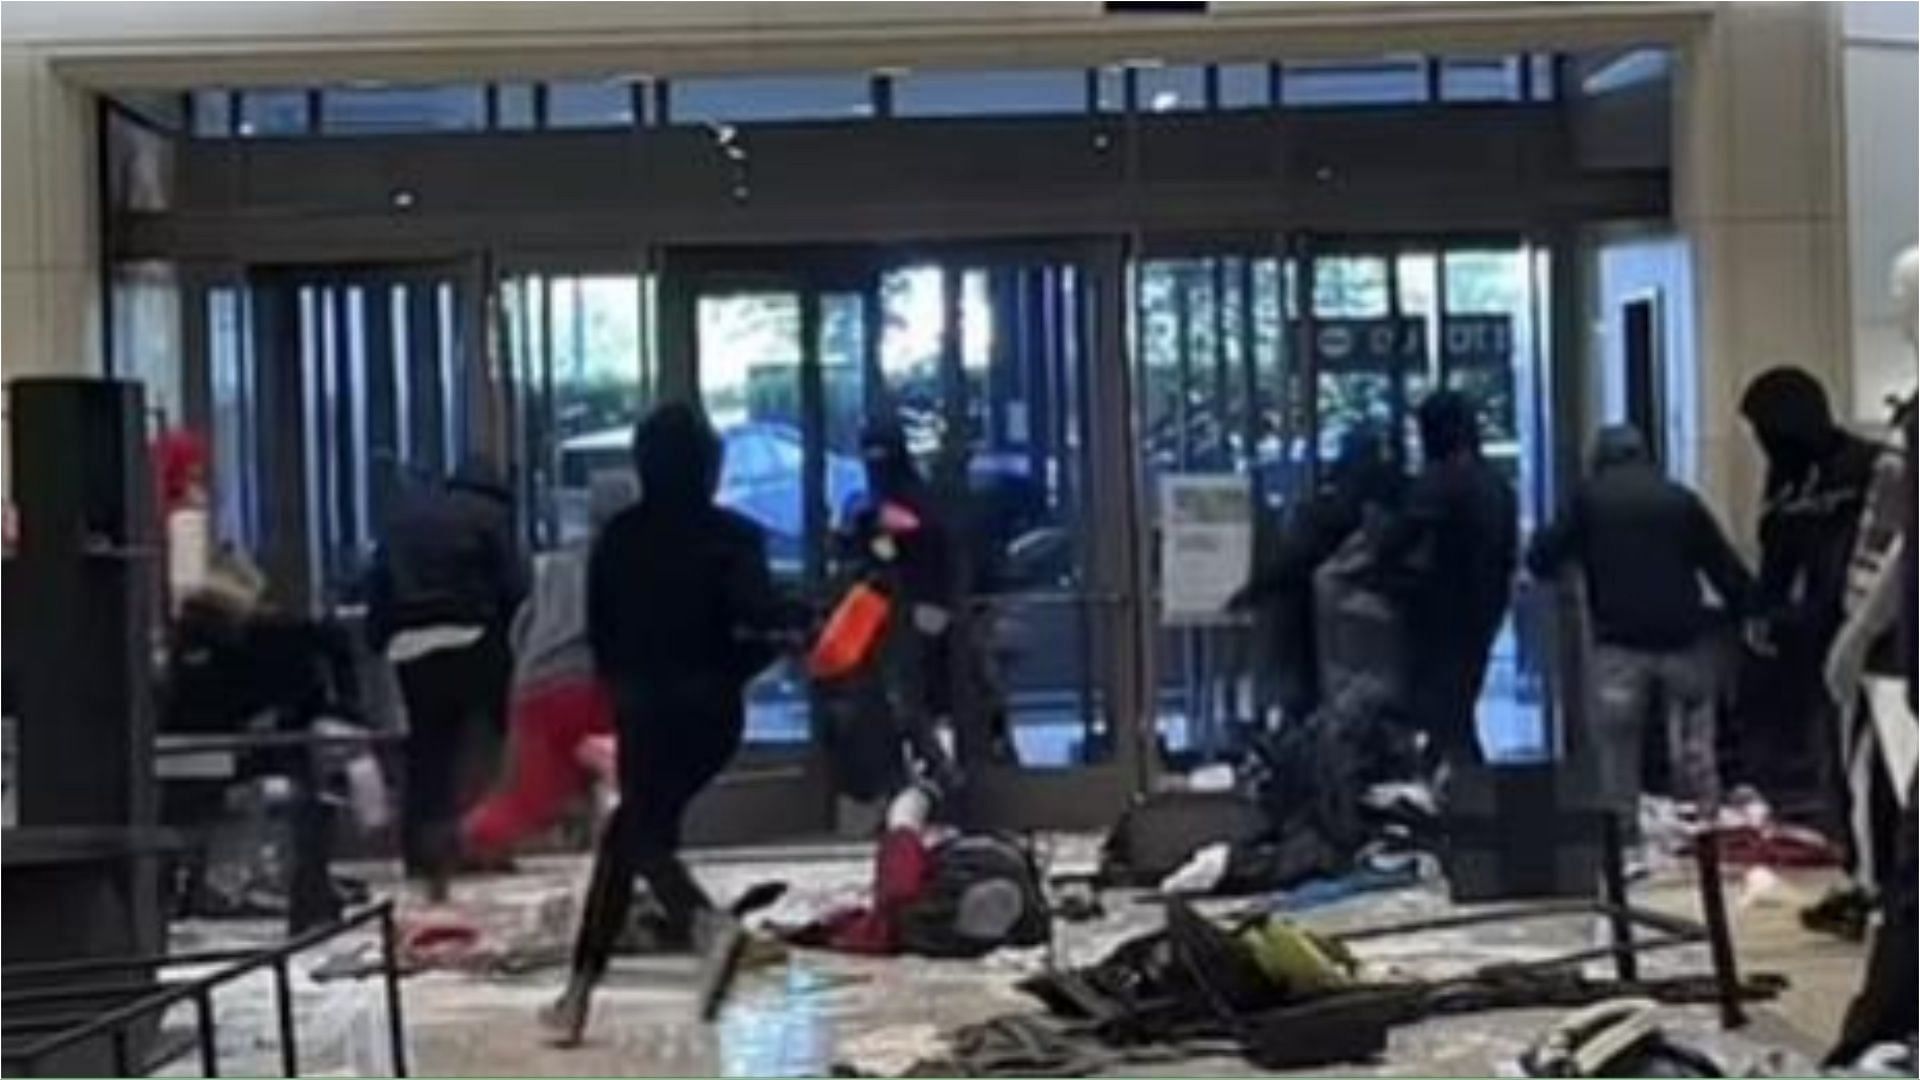 Gotham with no Batman: Topanga Mall Nordstrom looting video goes